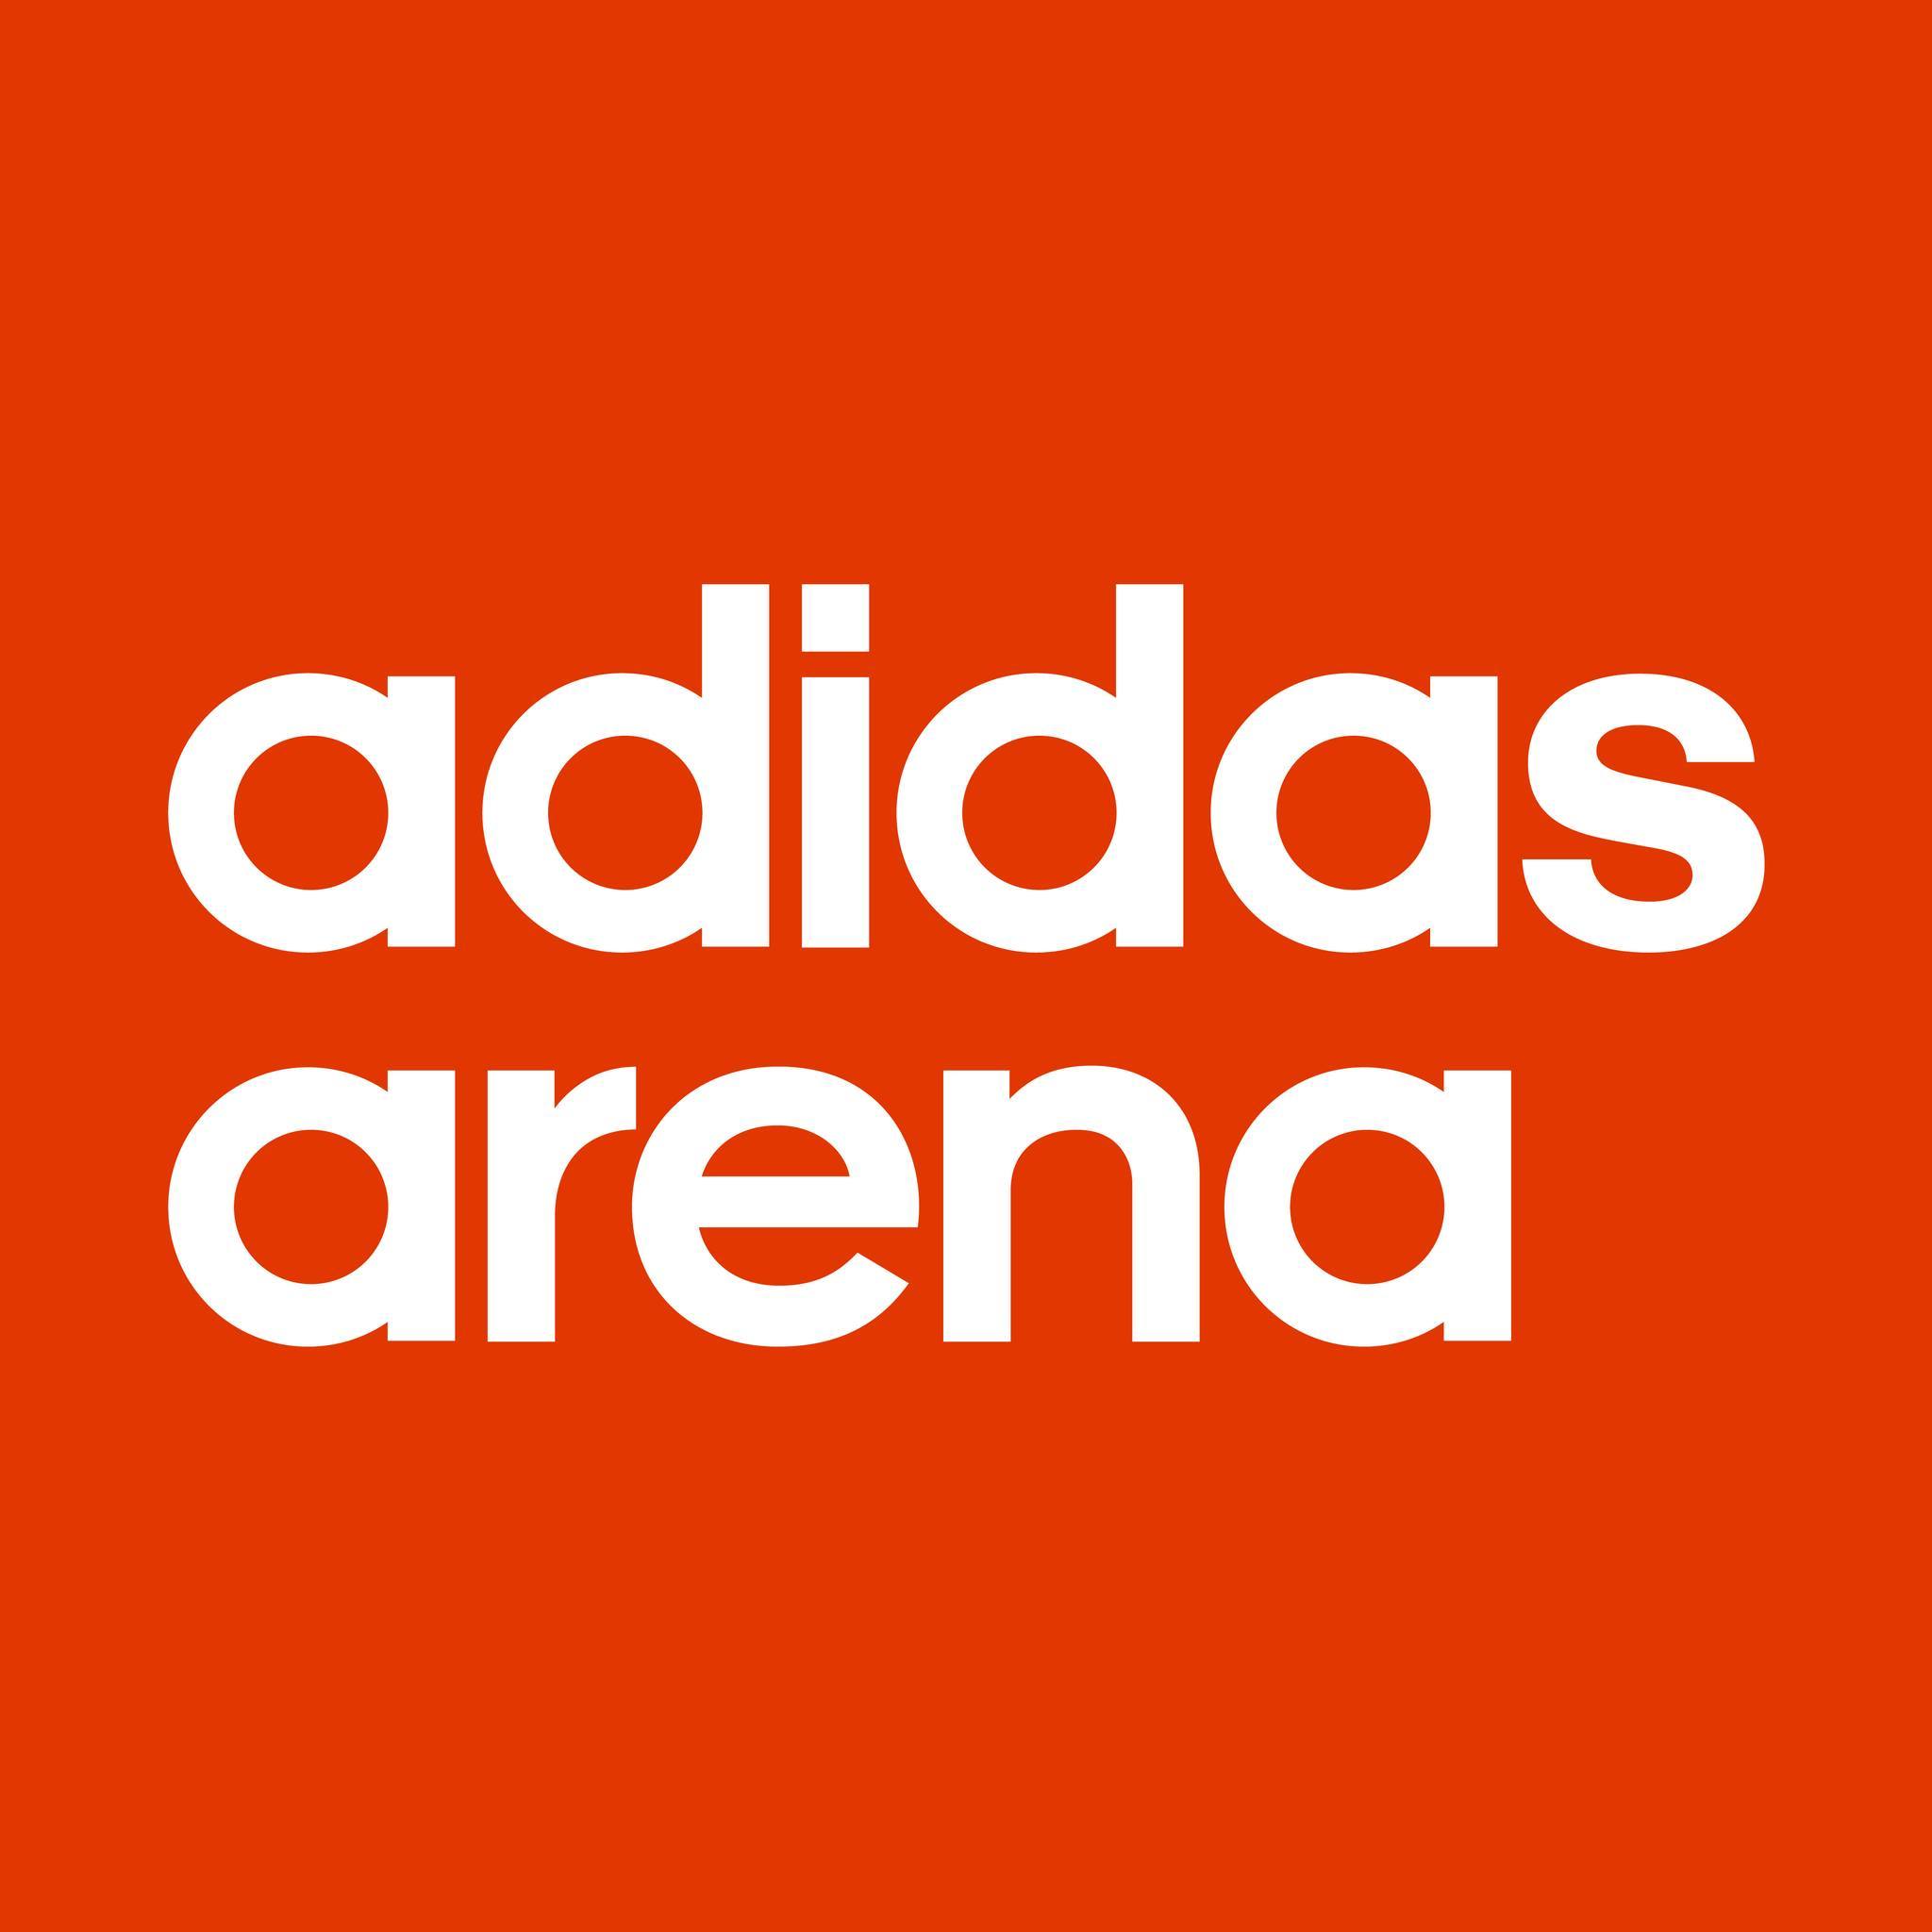 Adidas Arena Tickets